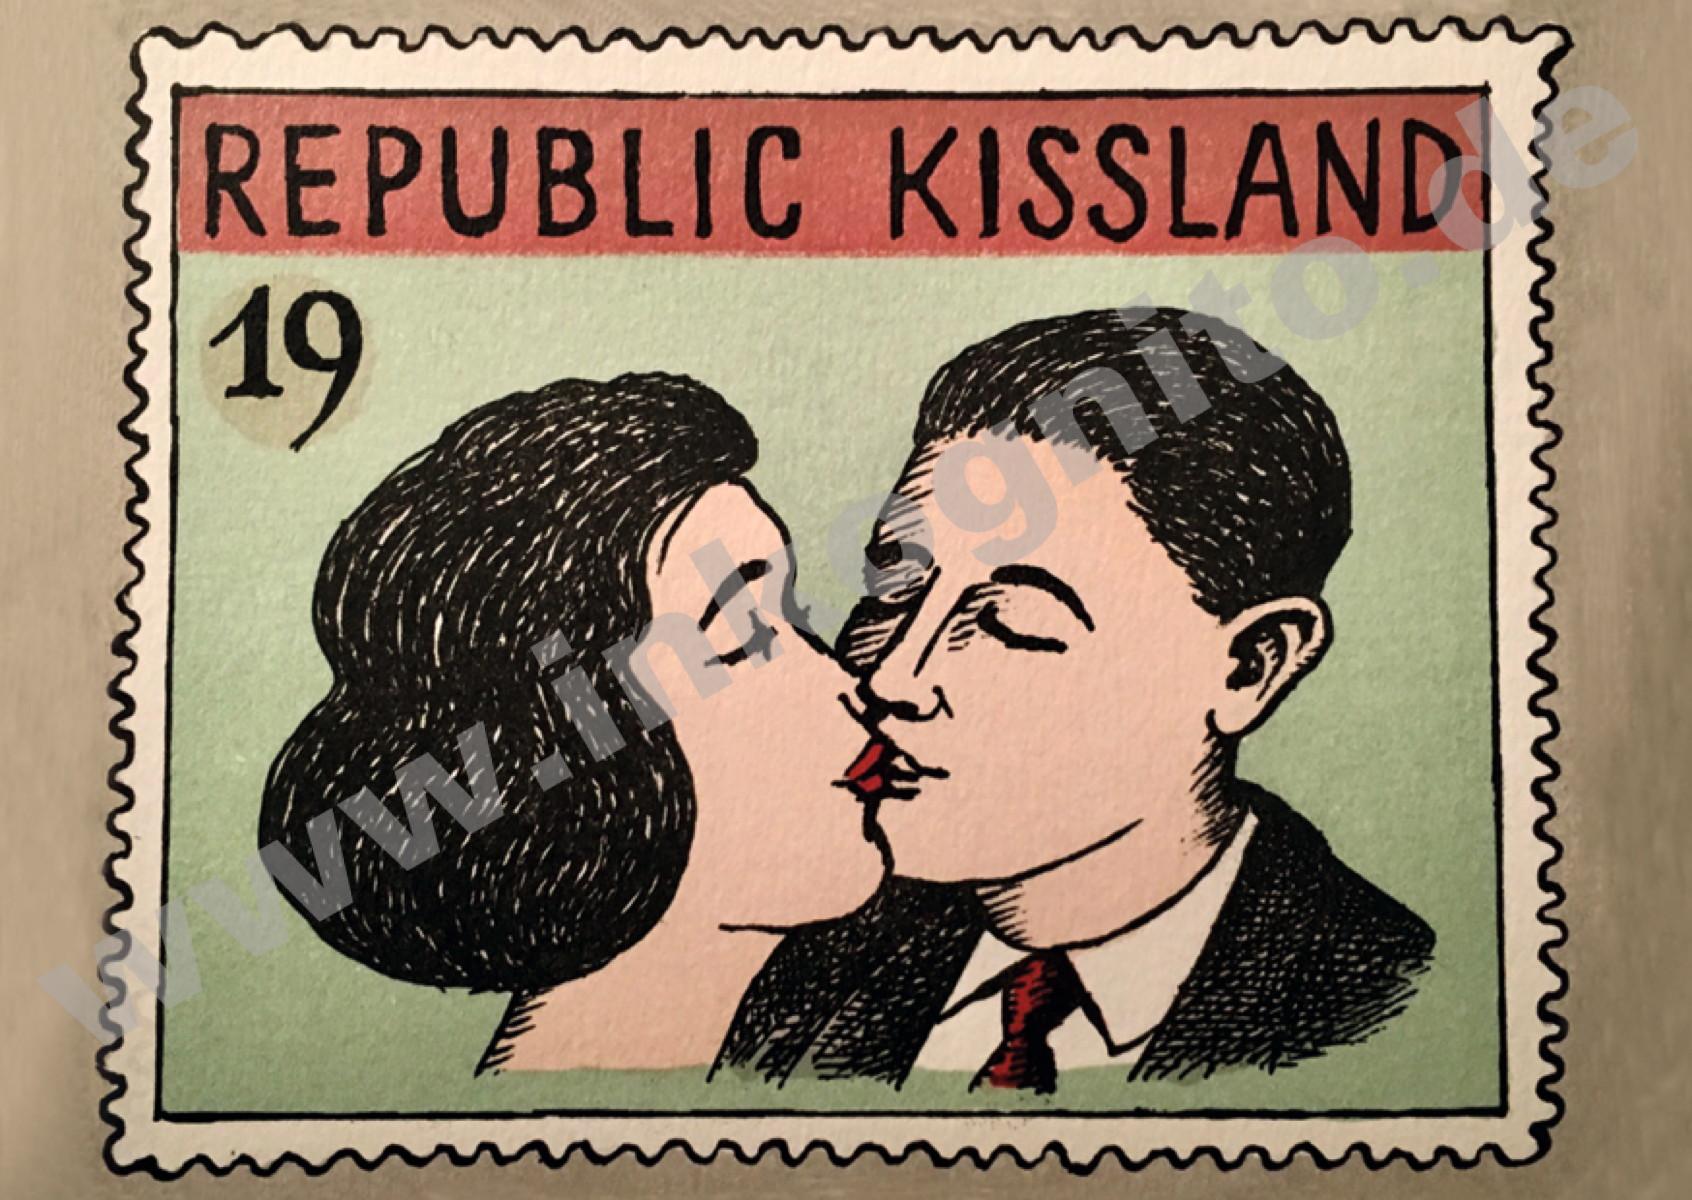 Republic Kissland